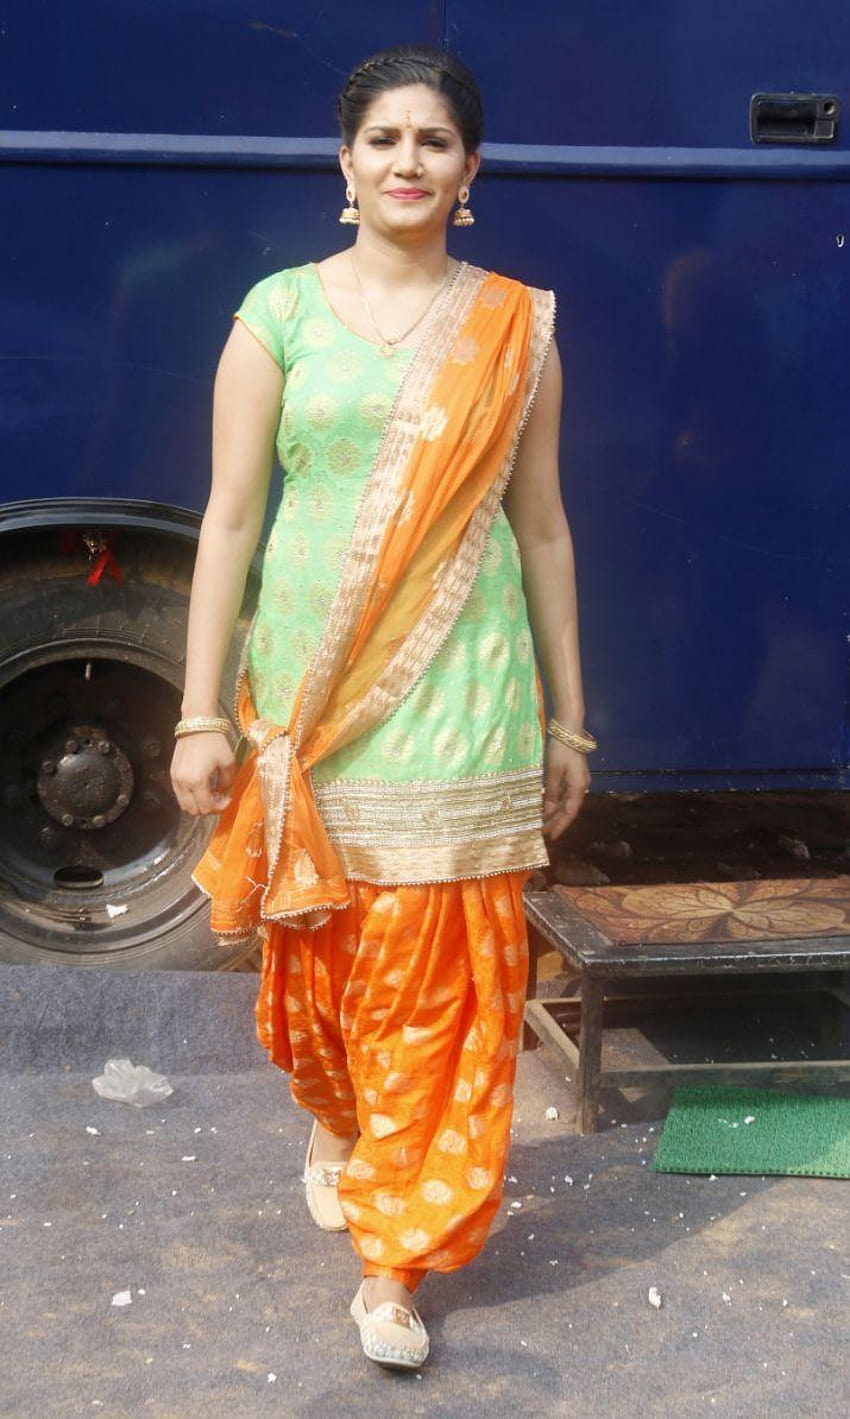 Sapna Choudhary per Android, telefono sapna choudhary Sfondo del telefono HD